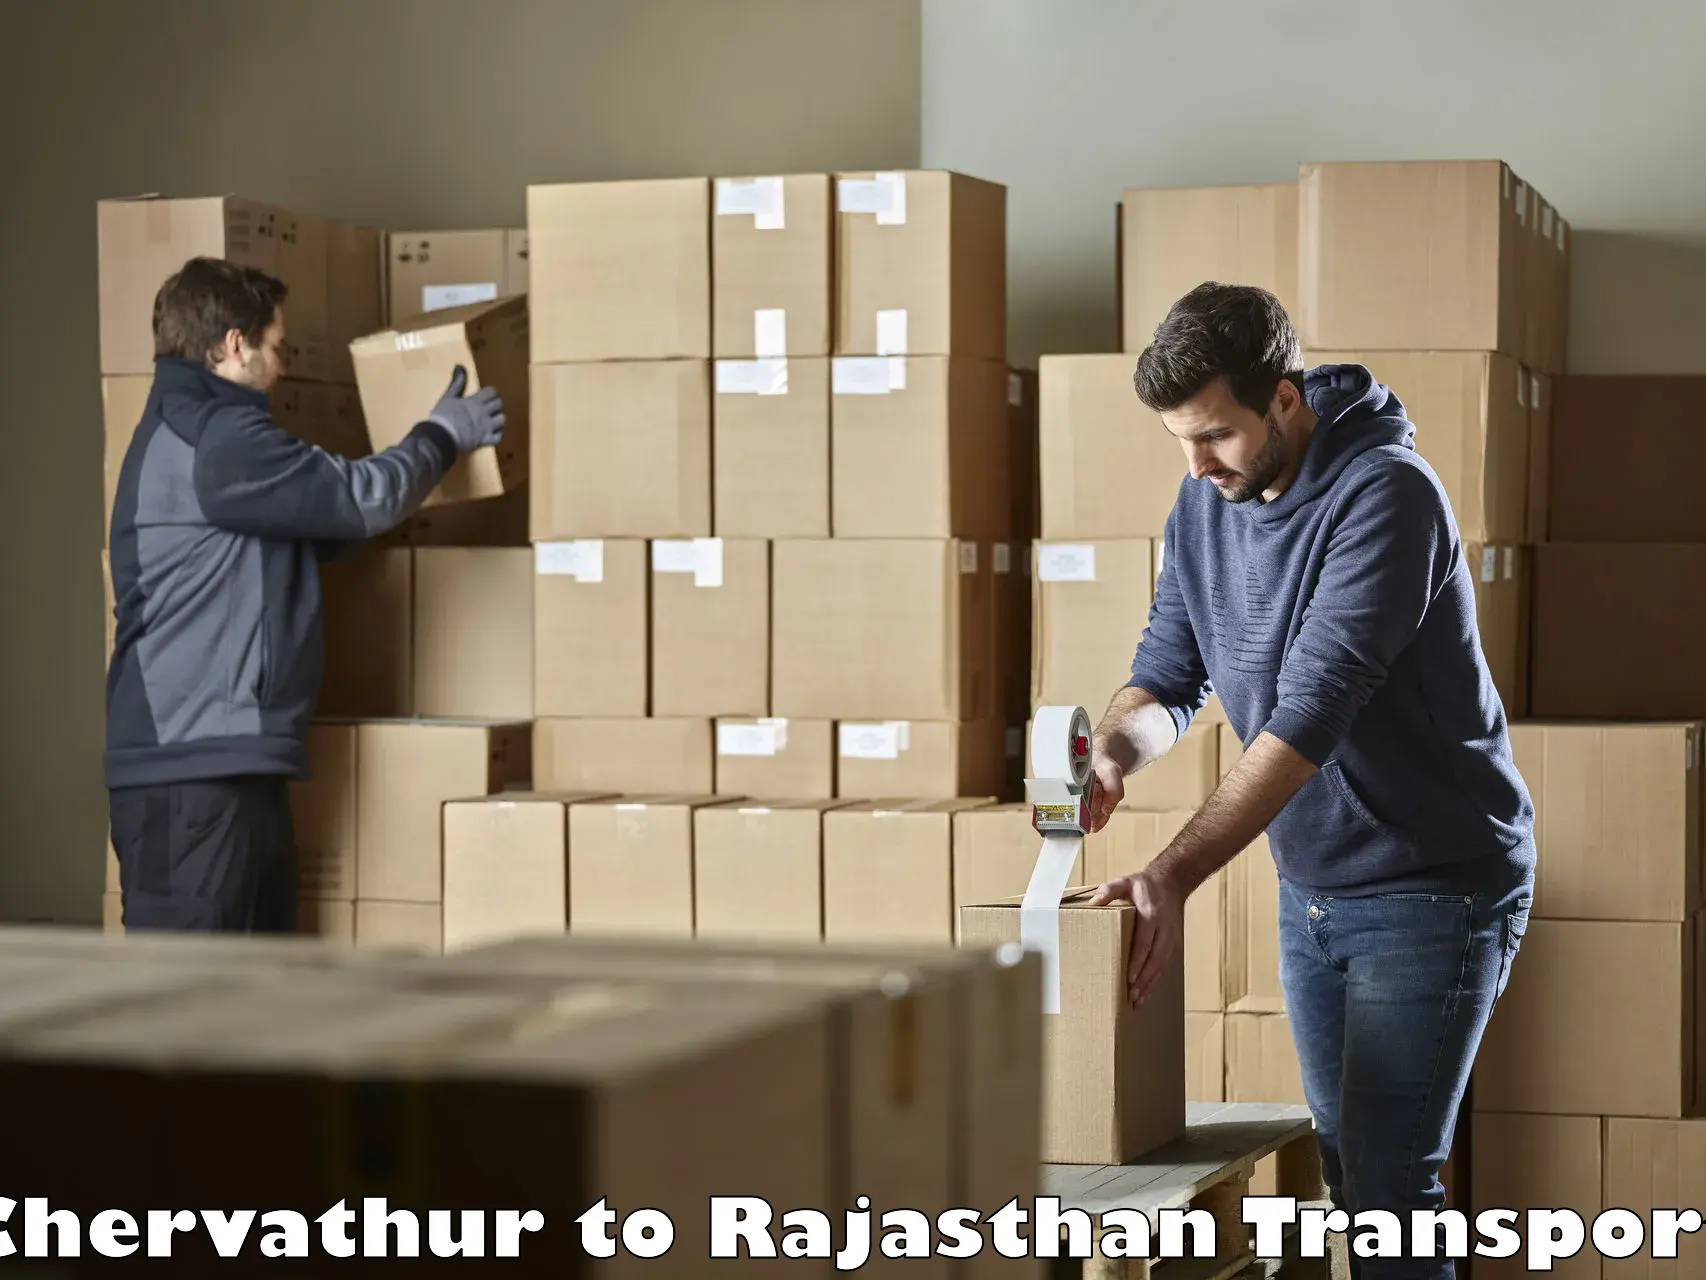 Container transport service Chervathur to Pokhran